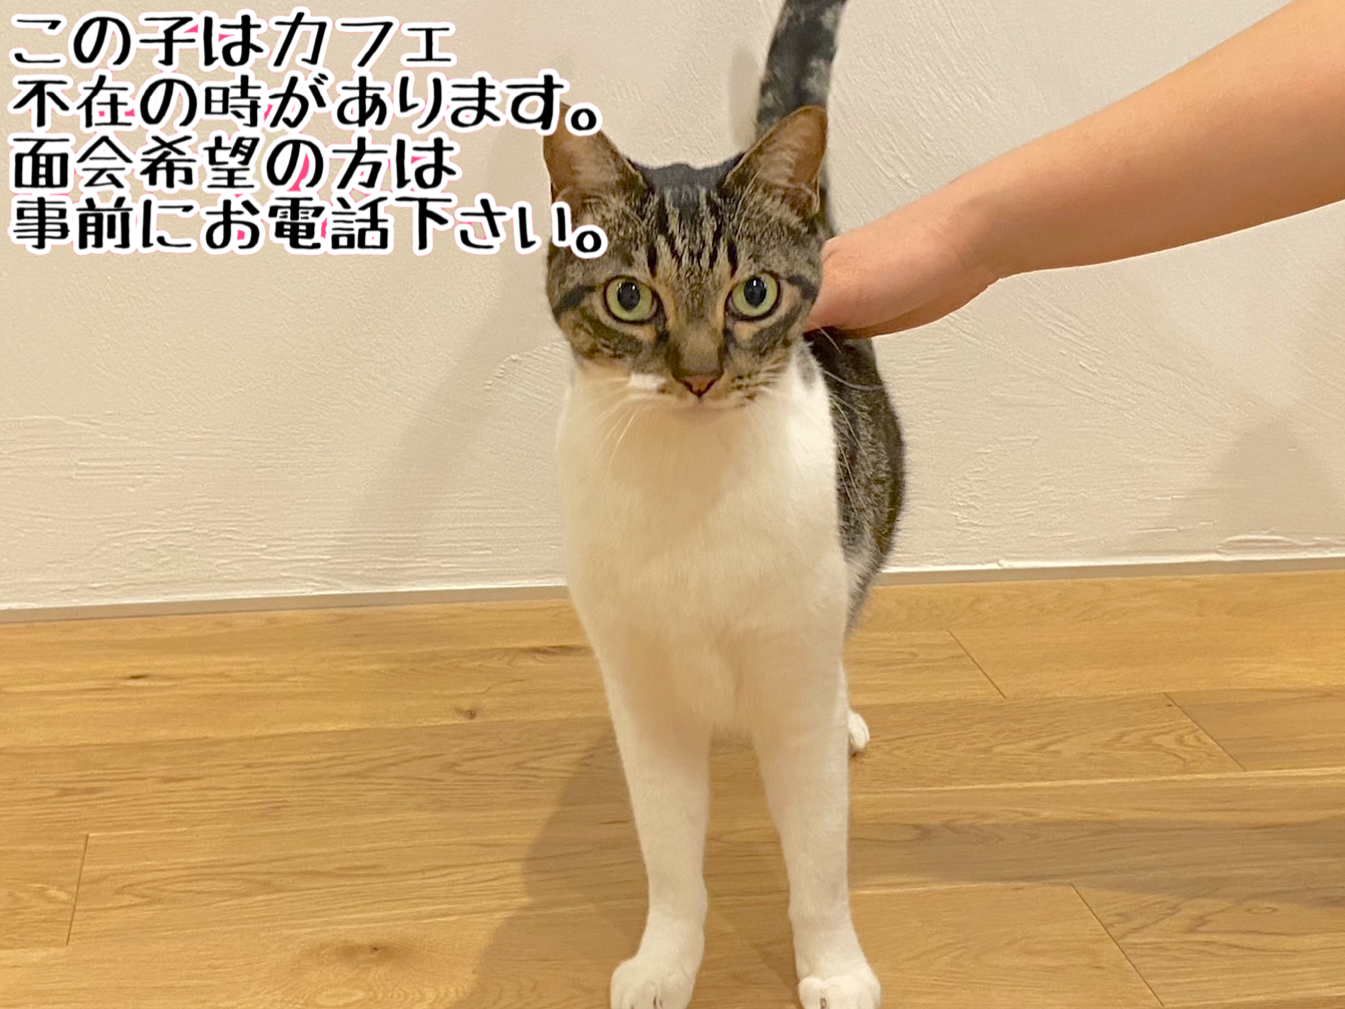 <ul>
<li>猫種：日本猫</li>
<li>名前（性別）：シマ(男の子)</li>
<li>年齢：2015年頃生まれ</li>
<li>保護経緯：飼い主が高齢になり介護施設入居のため飼育困難</li>
</ul>
